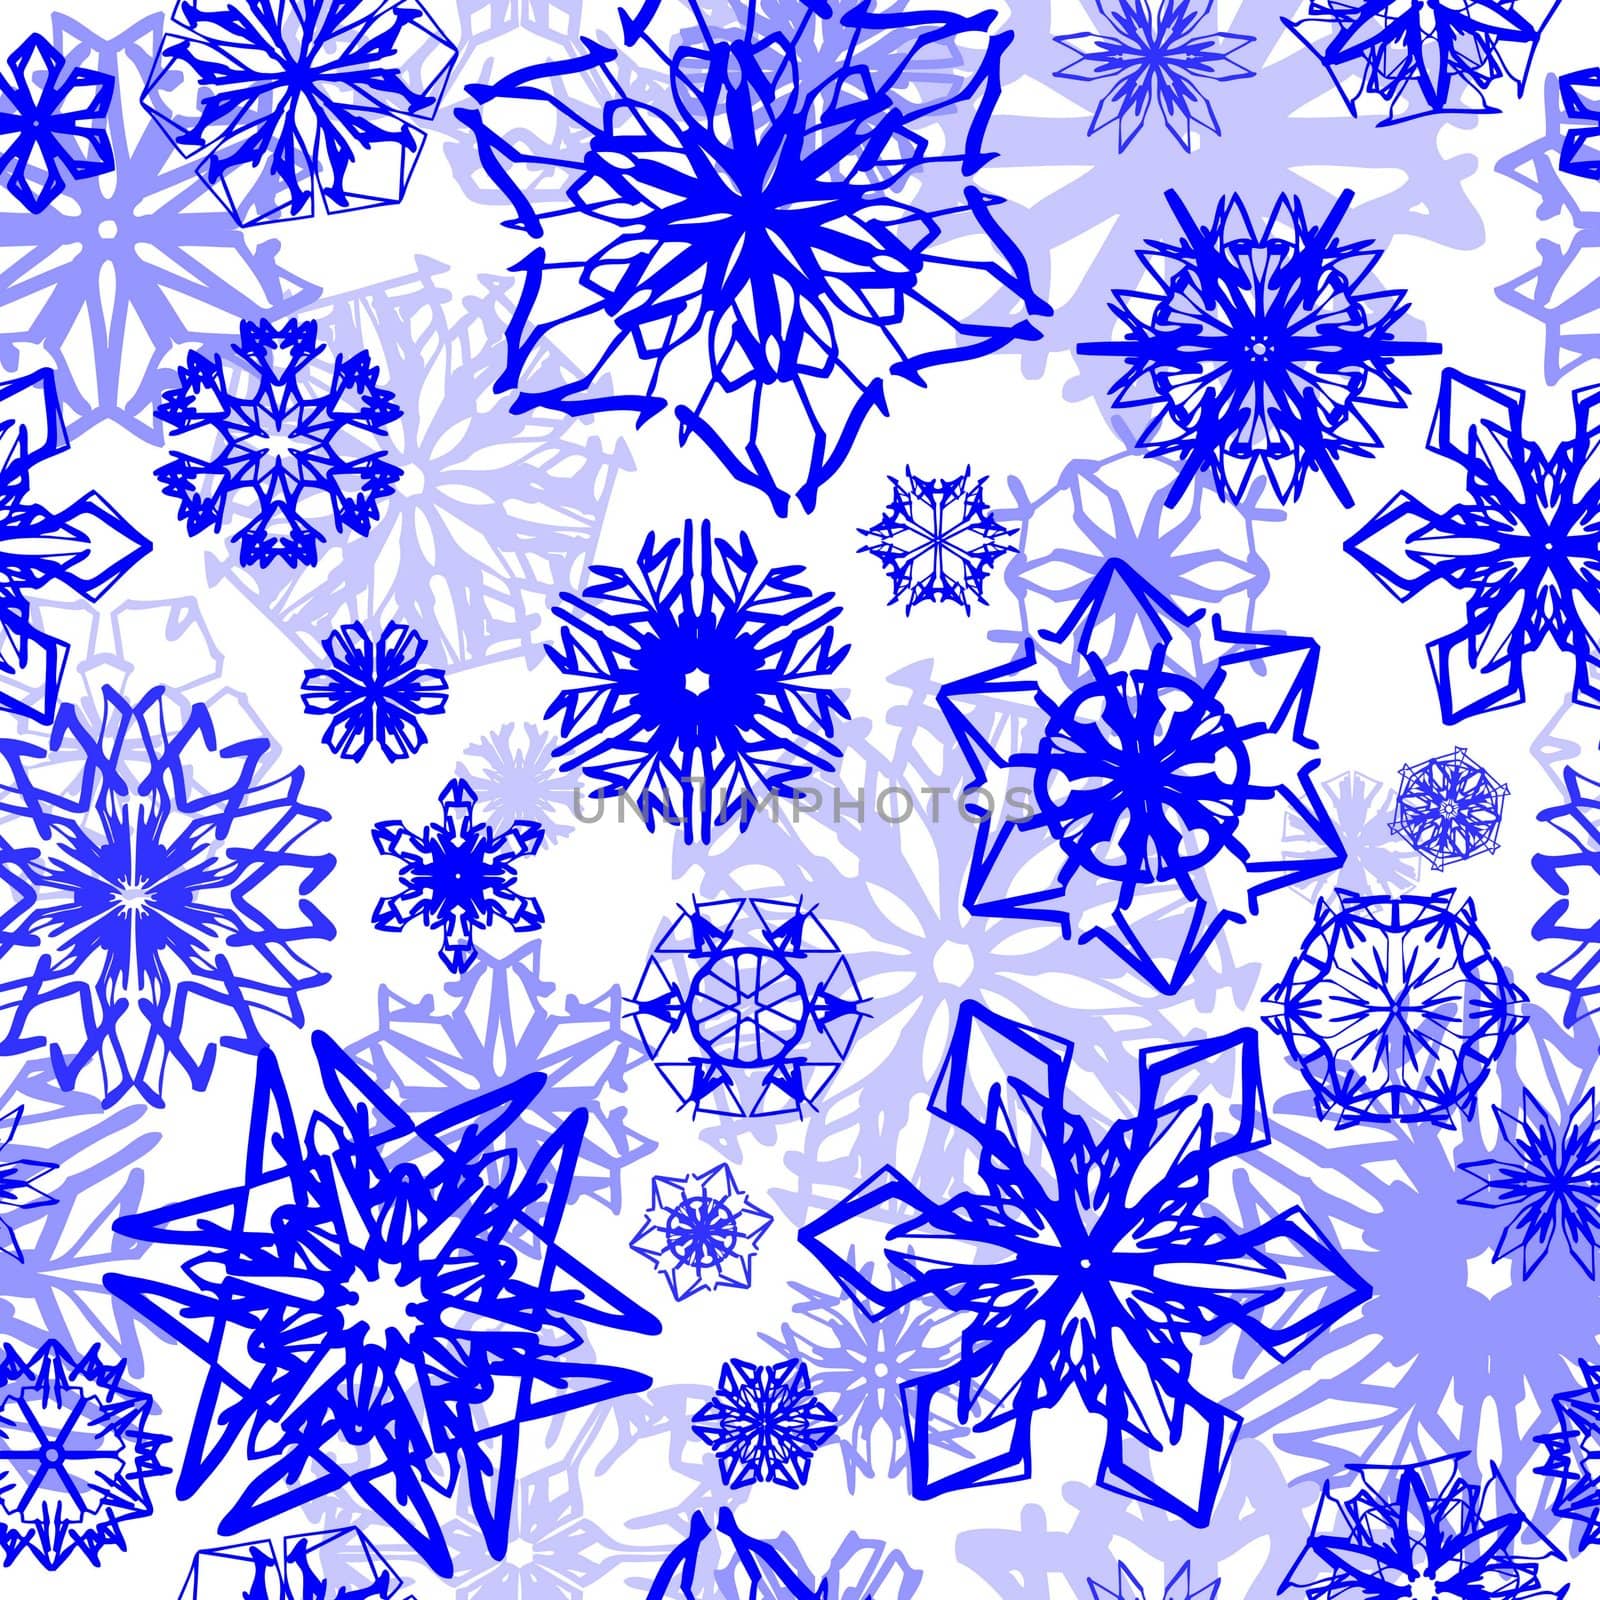 Snowflake by Baltus